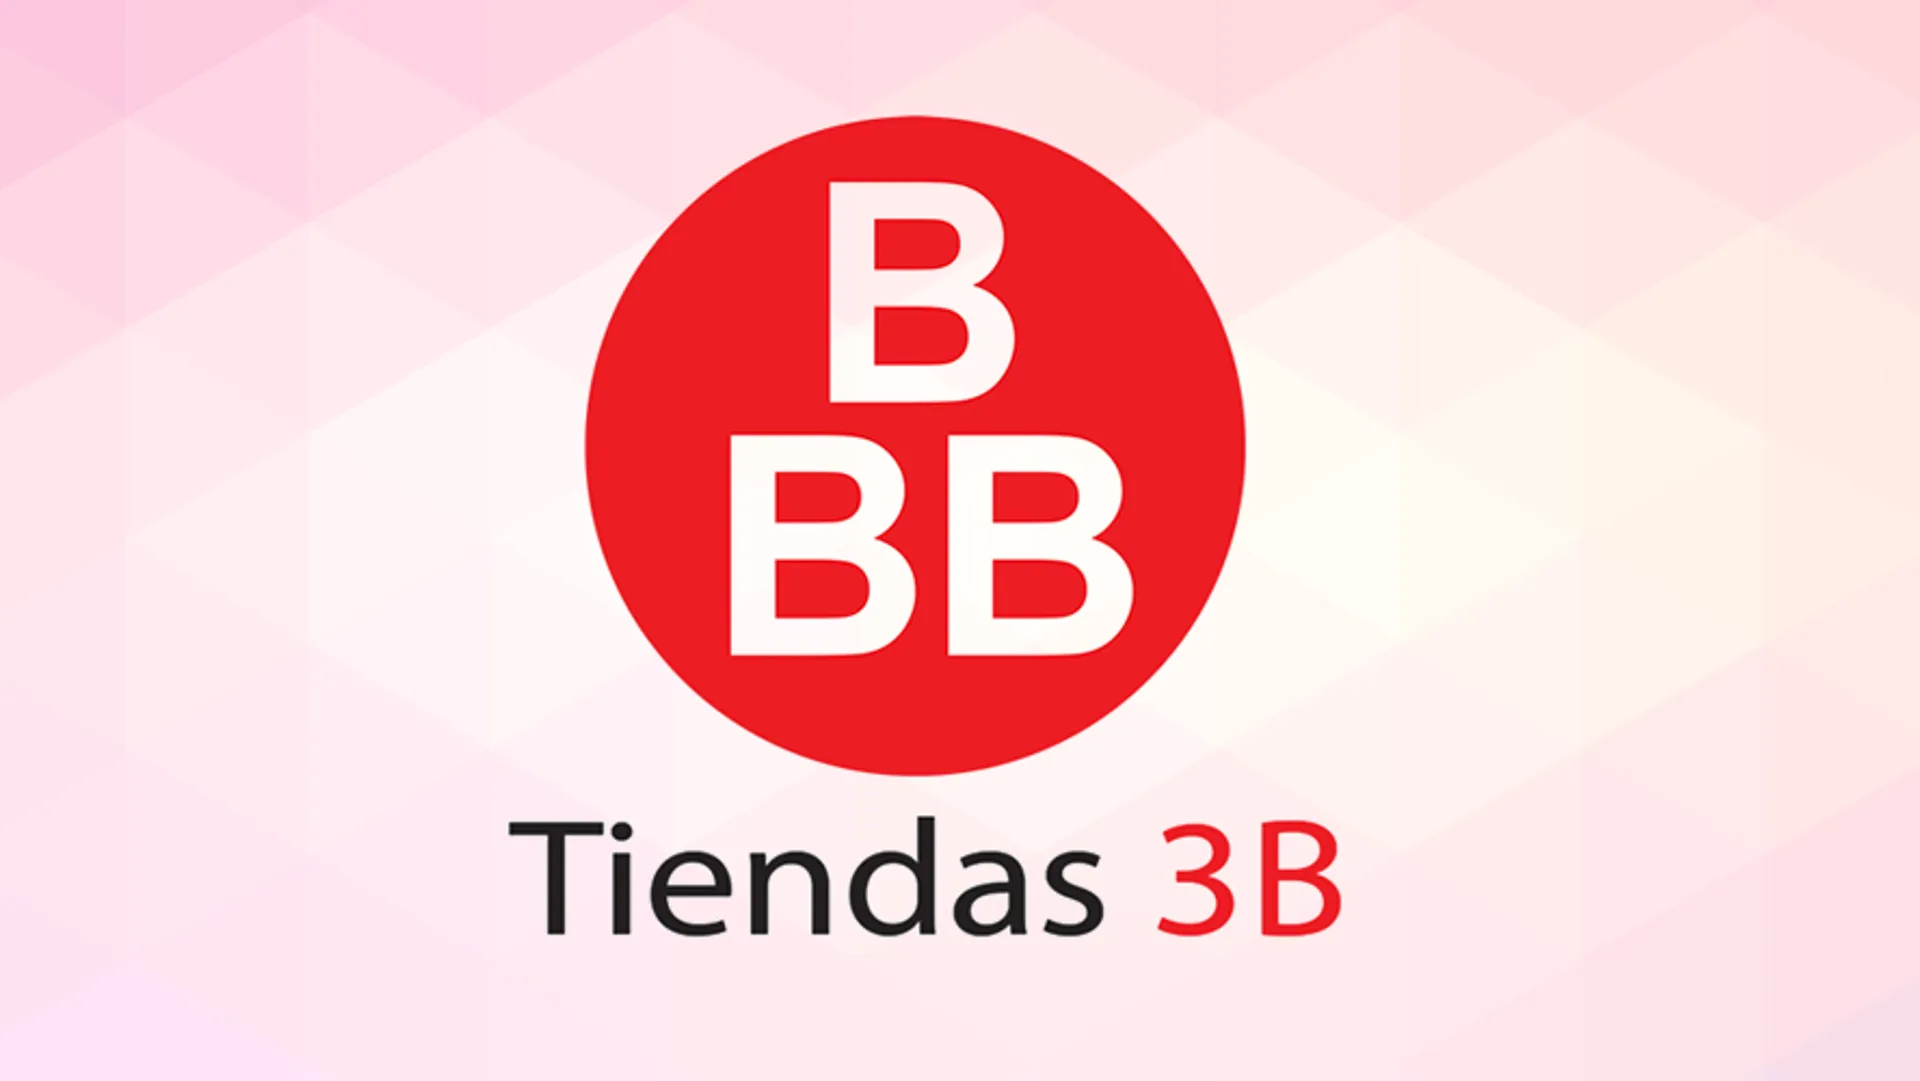 TIENDA TRES B logo